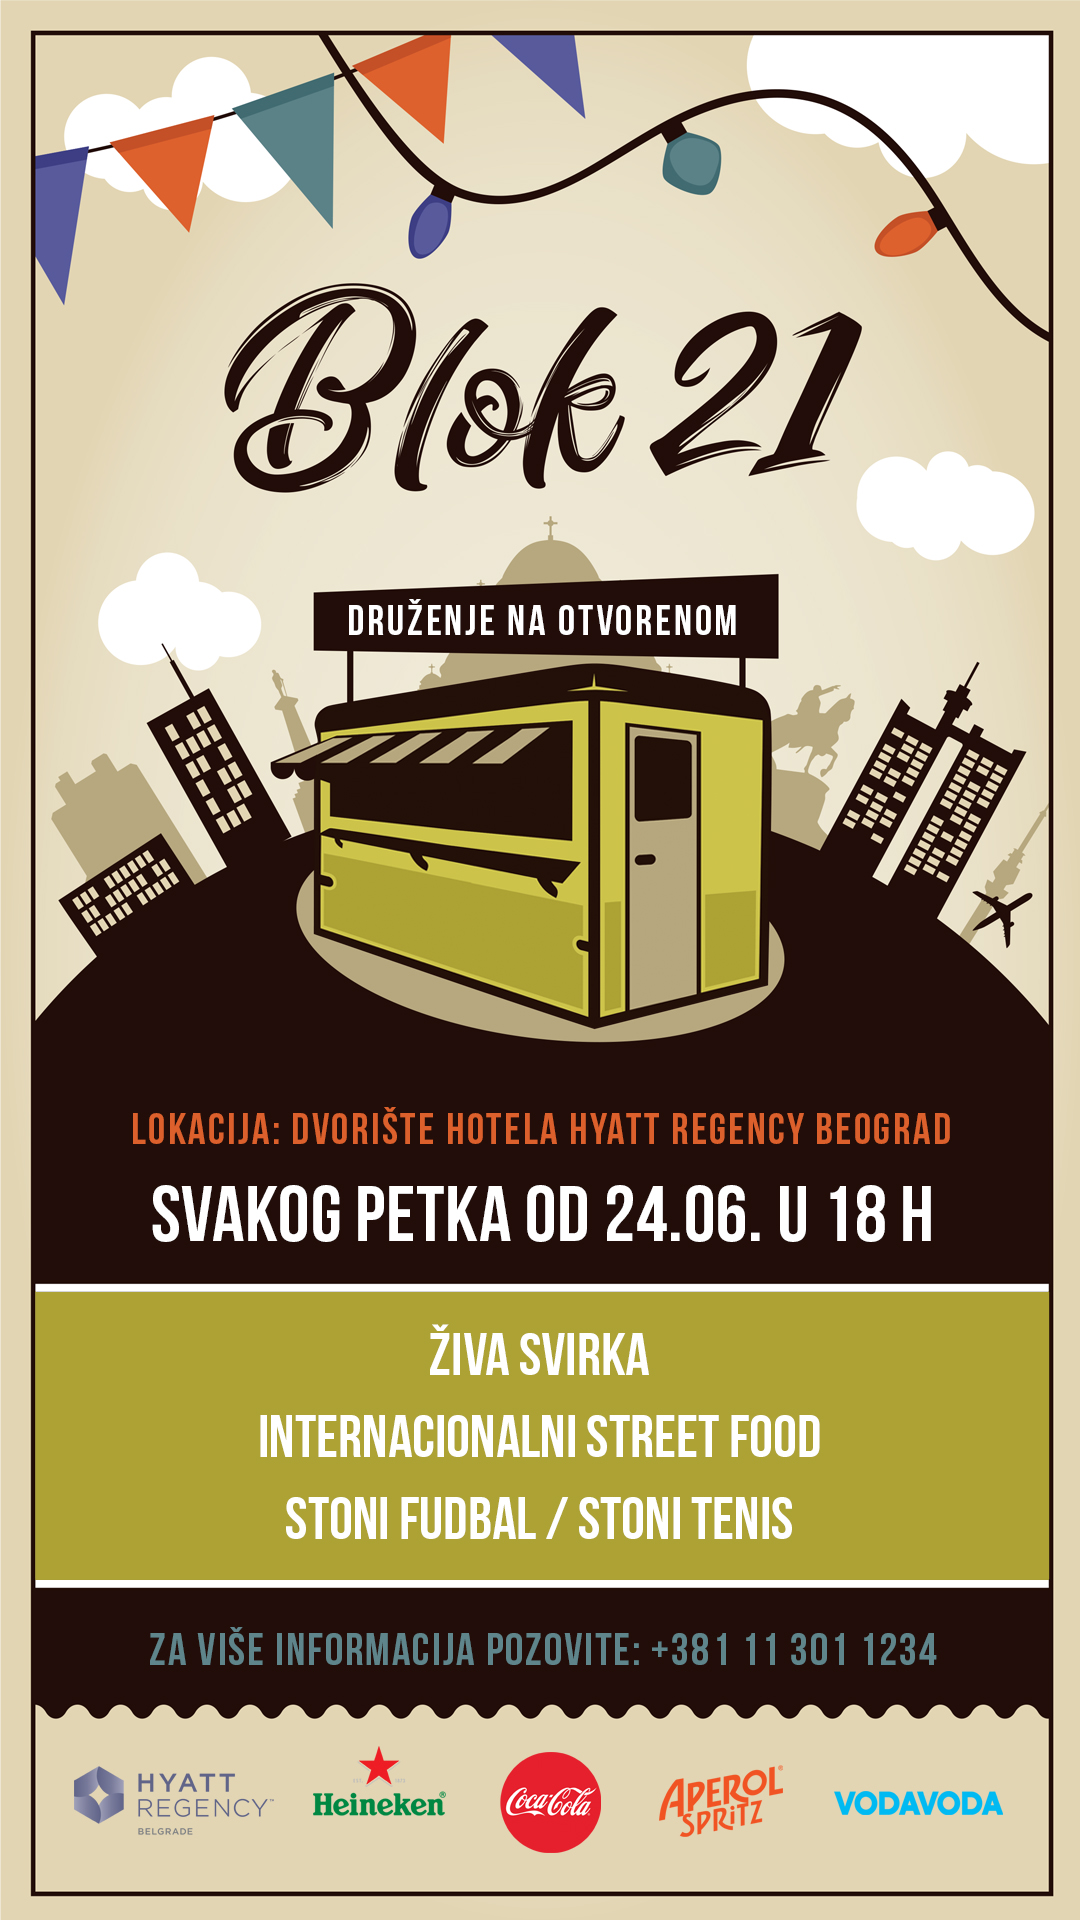 Hyatt Regency Belgrade invite you to event Blok 21!